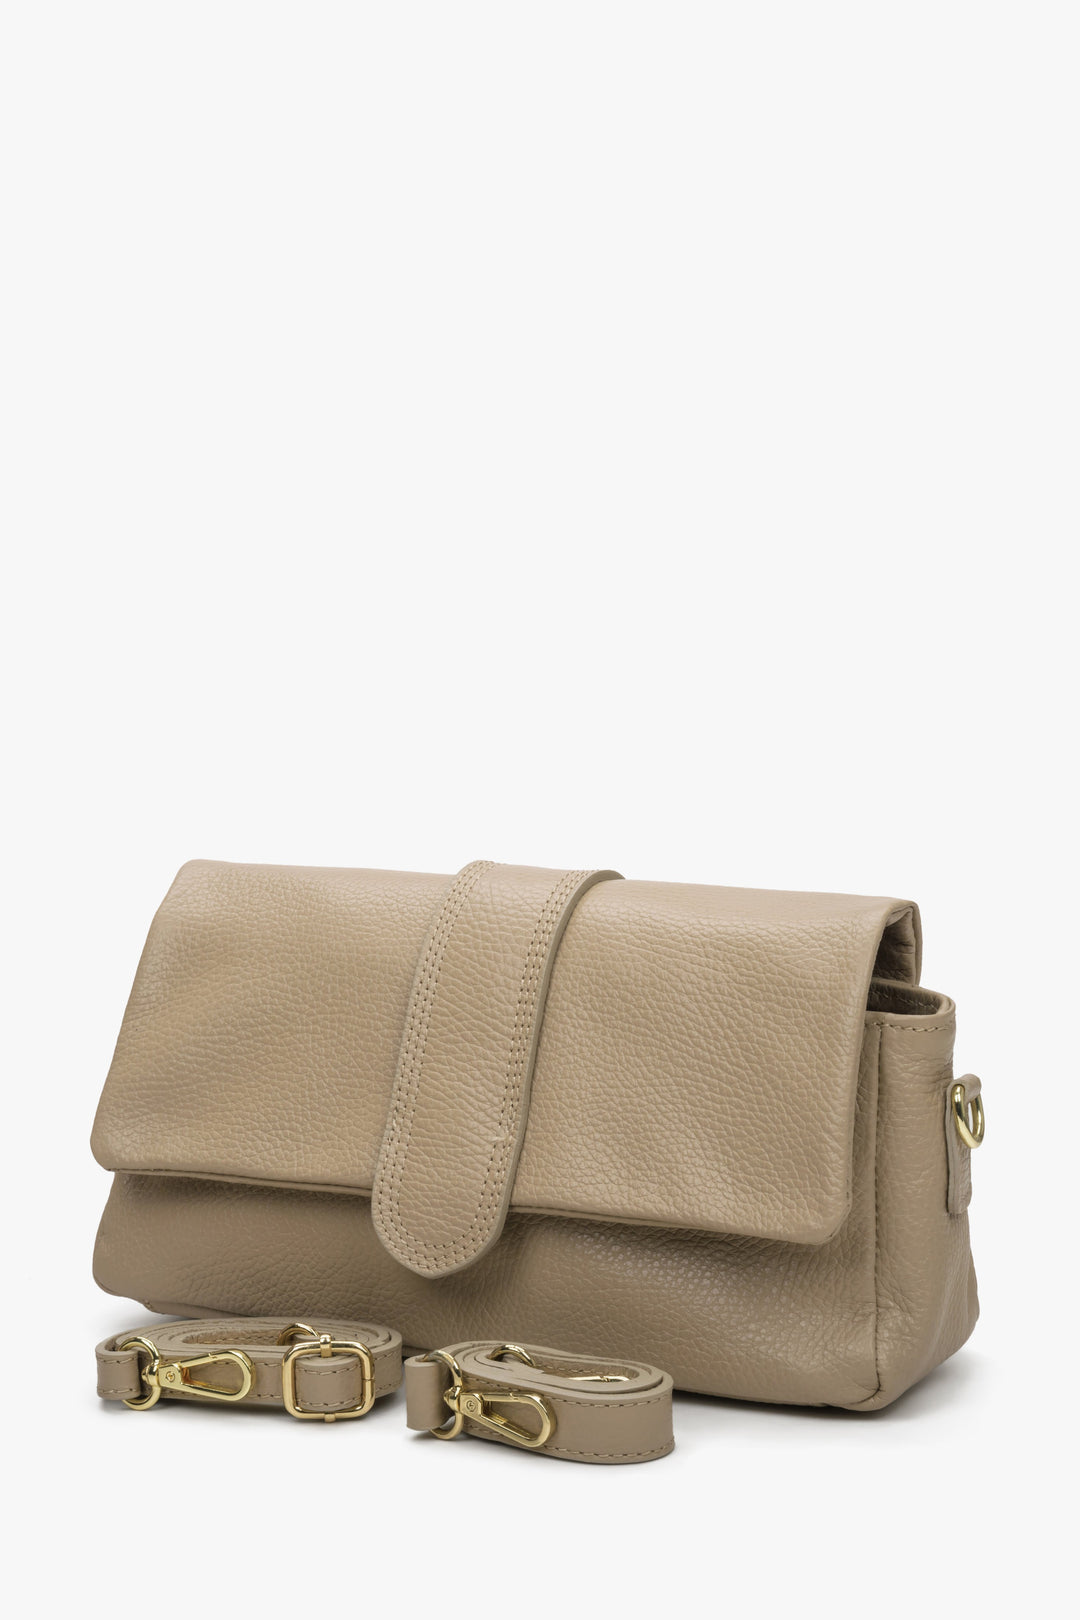 Women's beige leather handbag with adjustable strap.